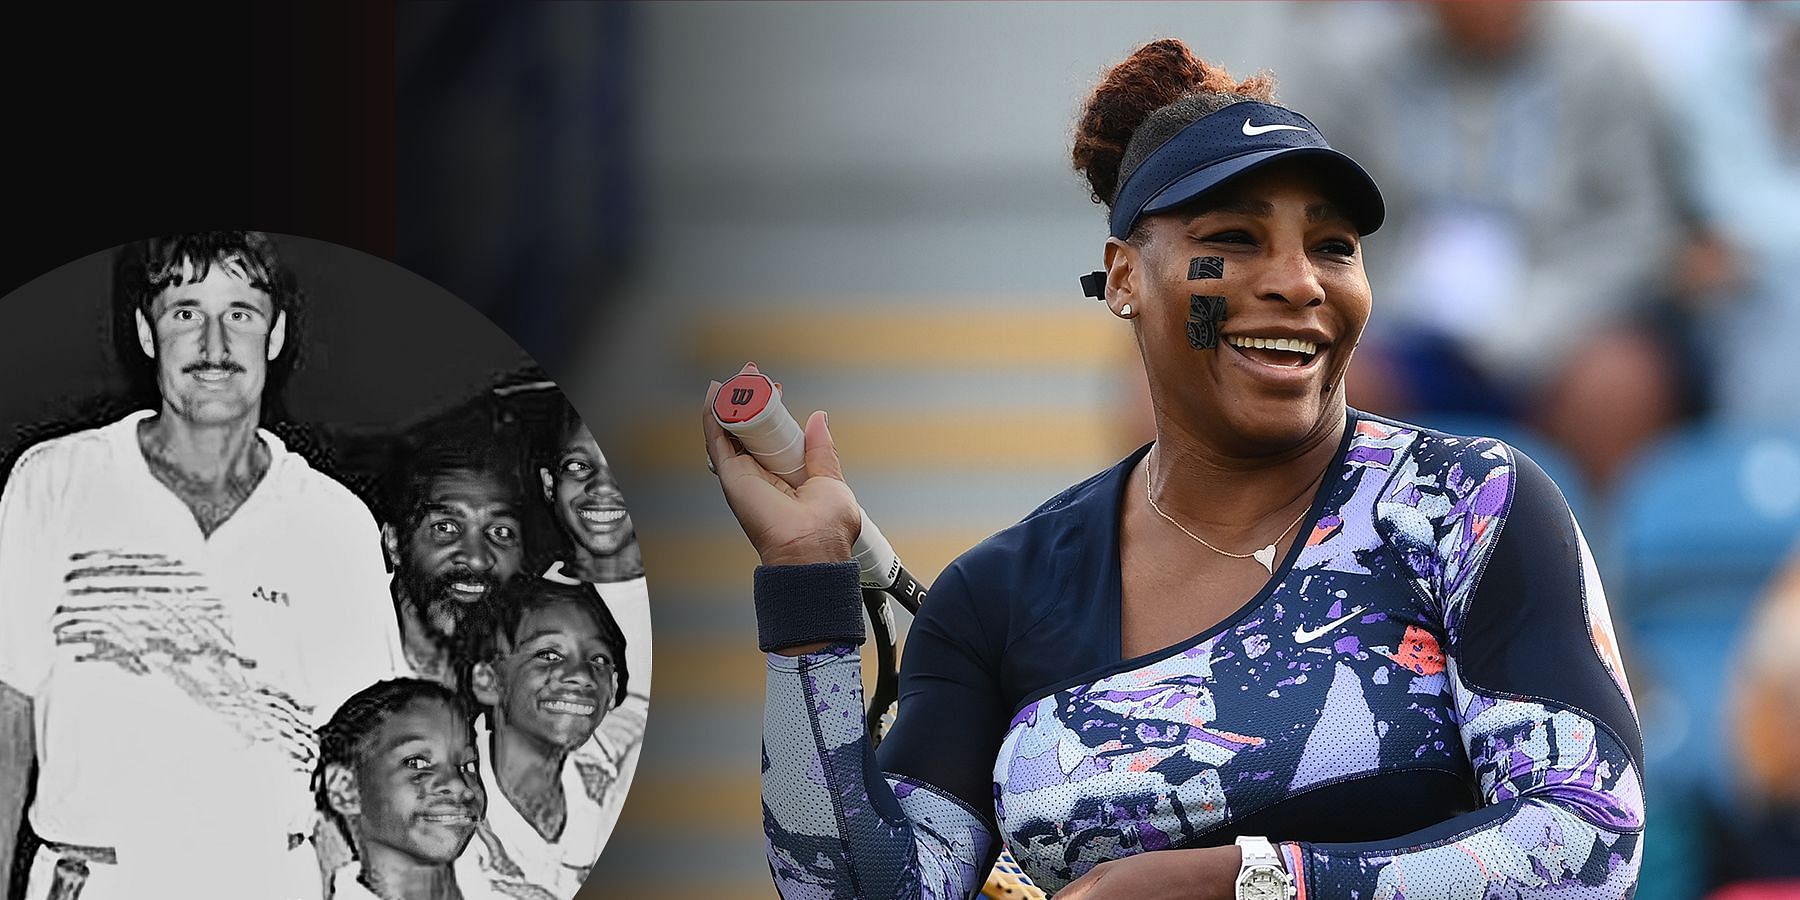 Rick Macci has paid tribute to Serena Williams